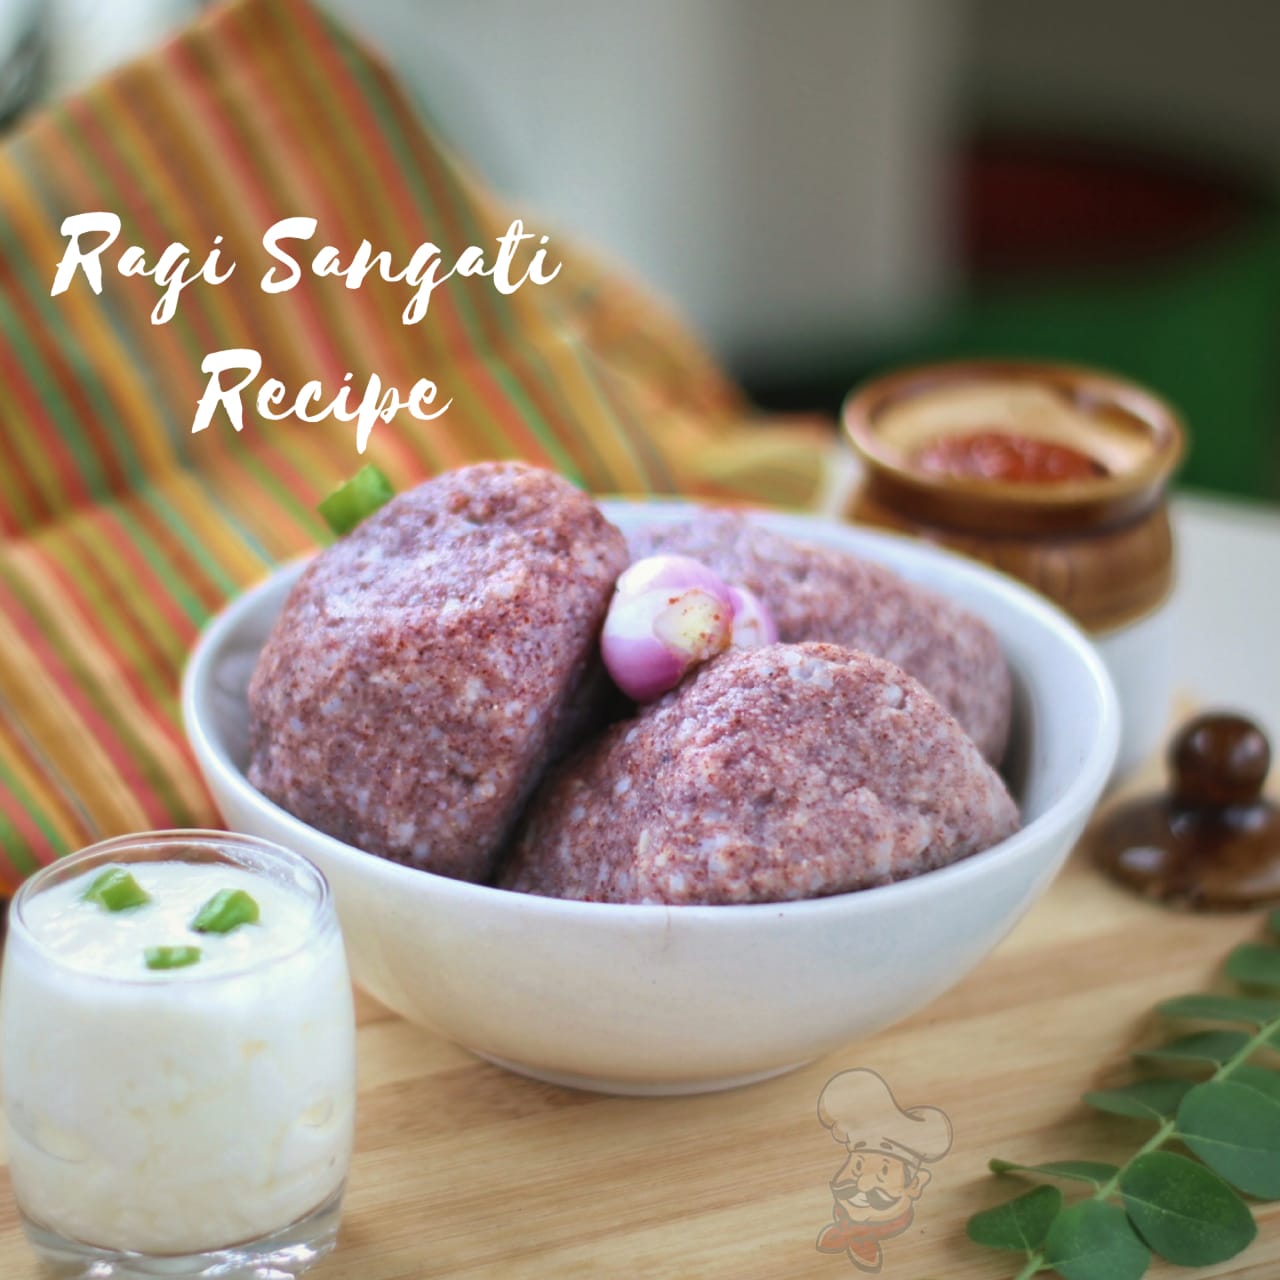 Ragi Sangati Recipe